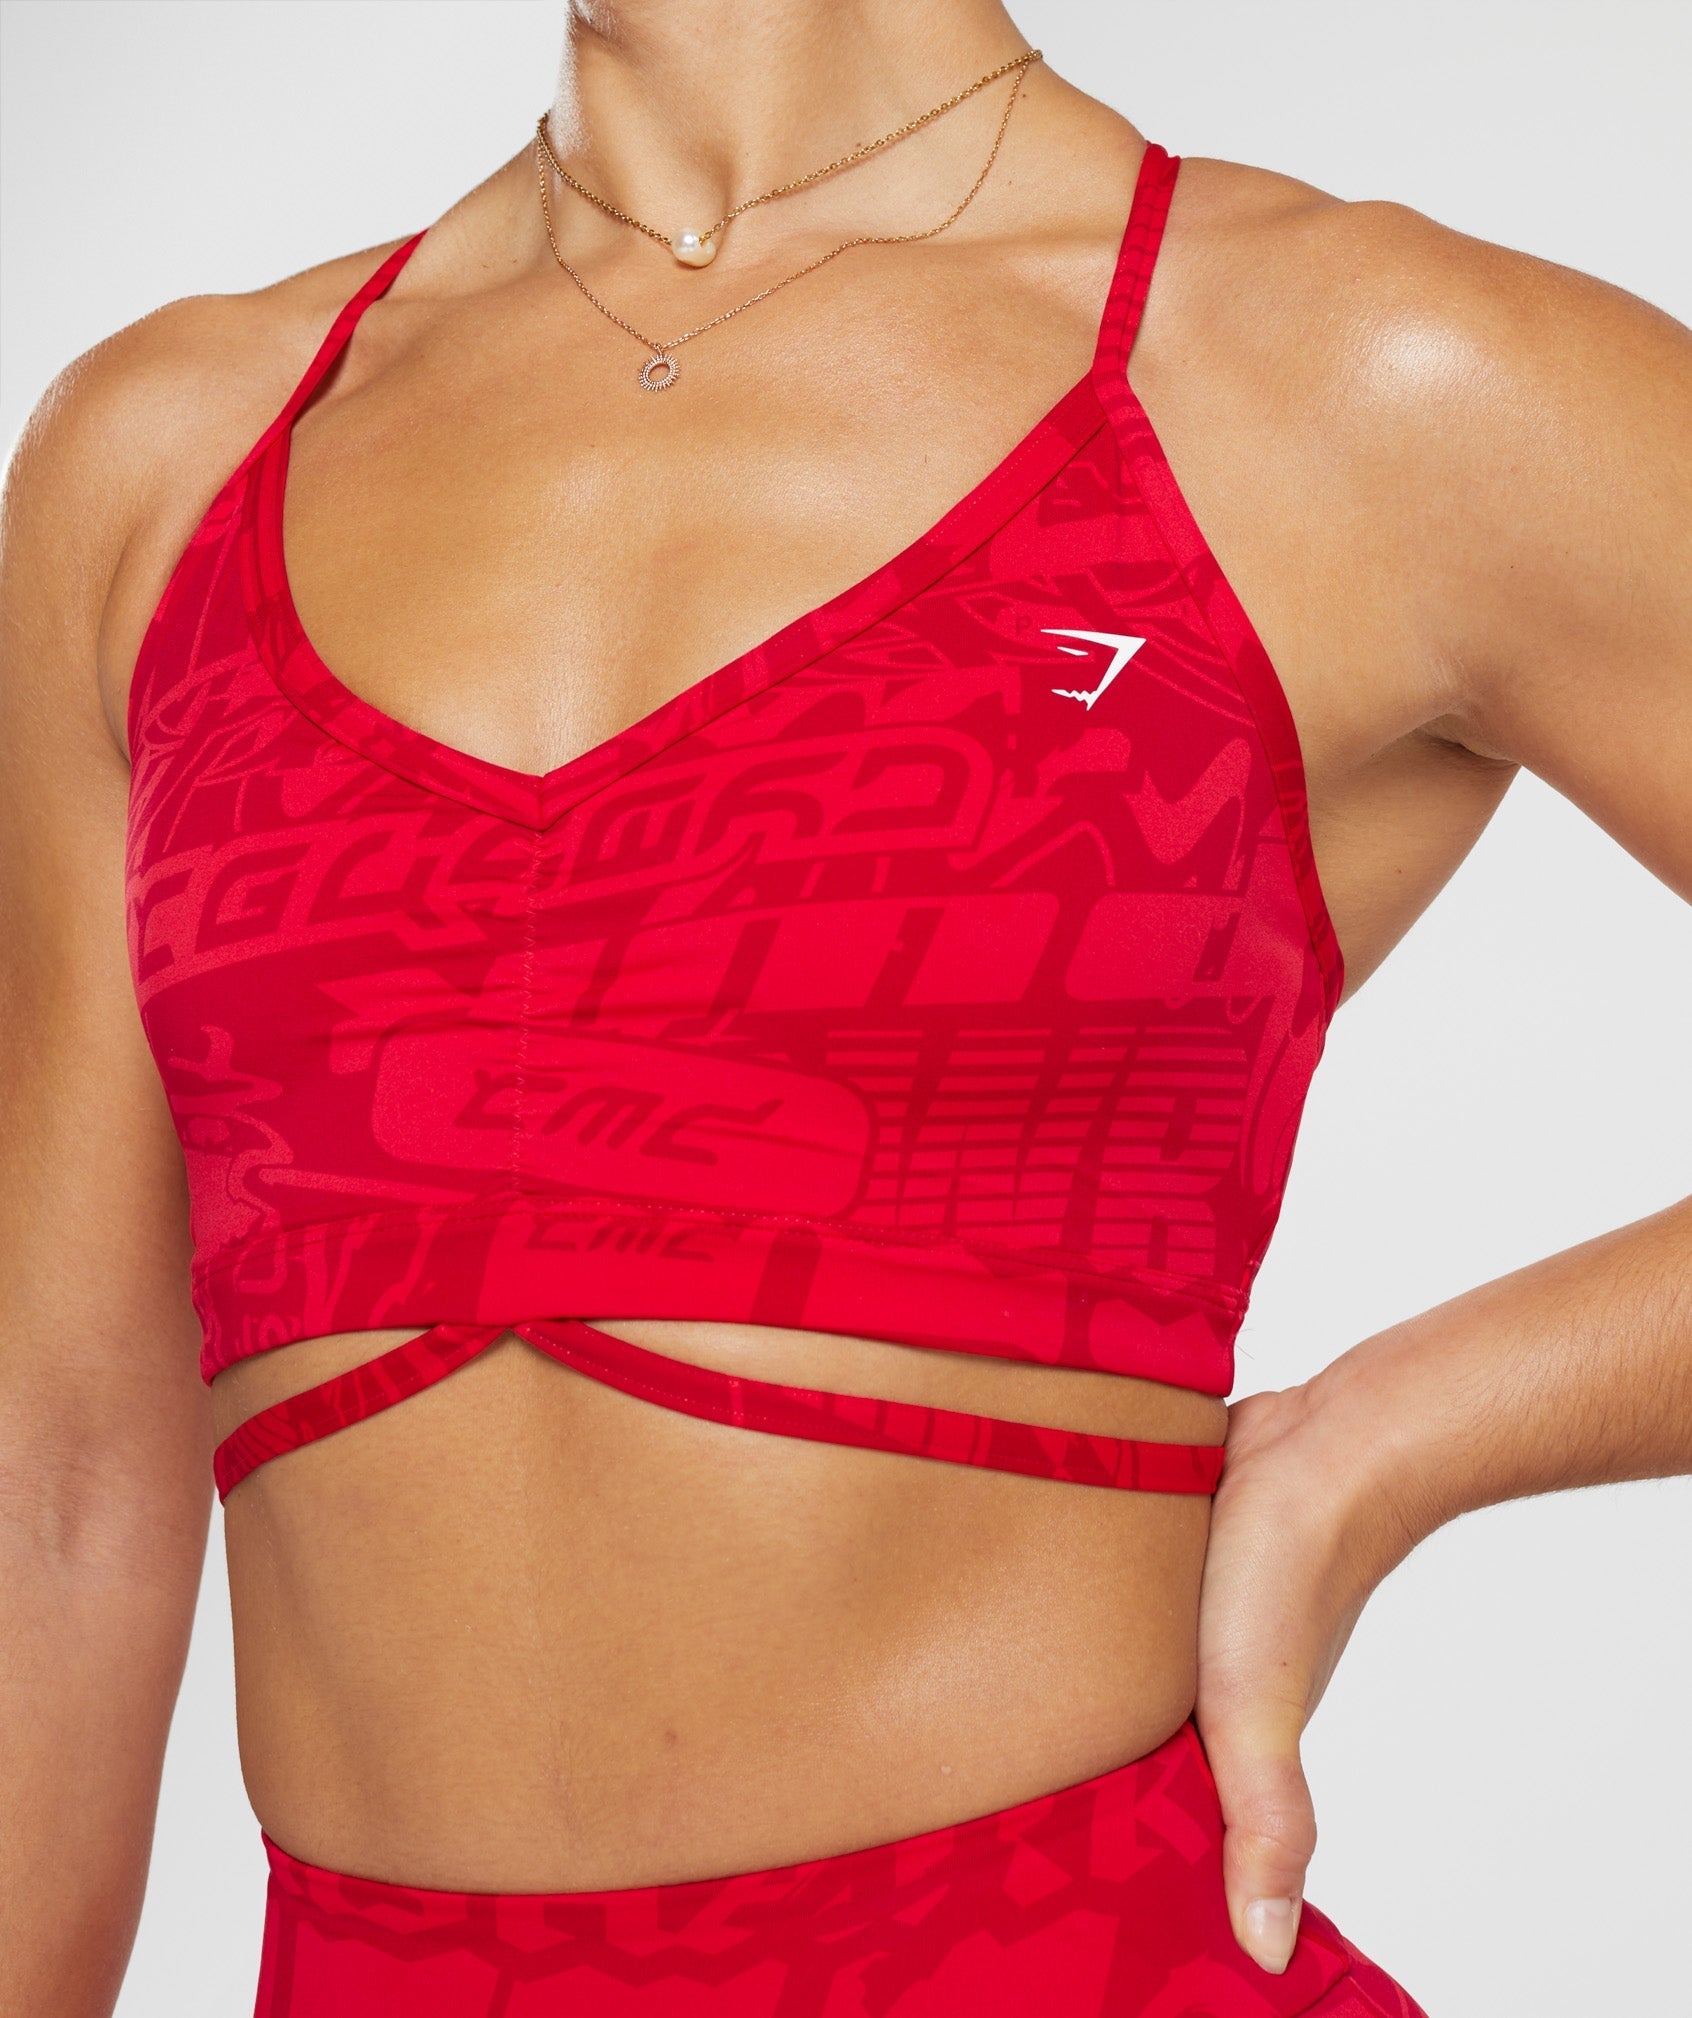 NWOT red DSG sports bra size M  Clothes design, Best wear, Sports